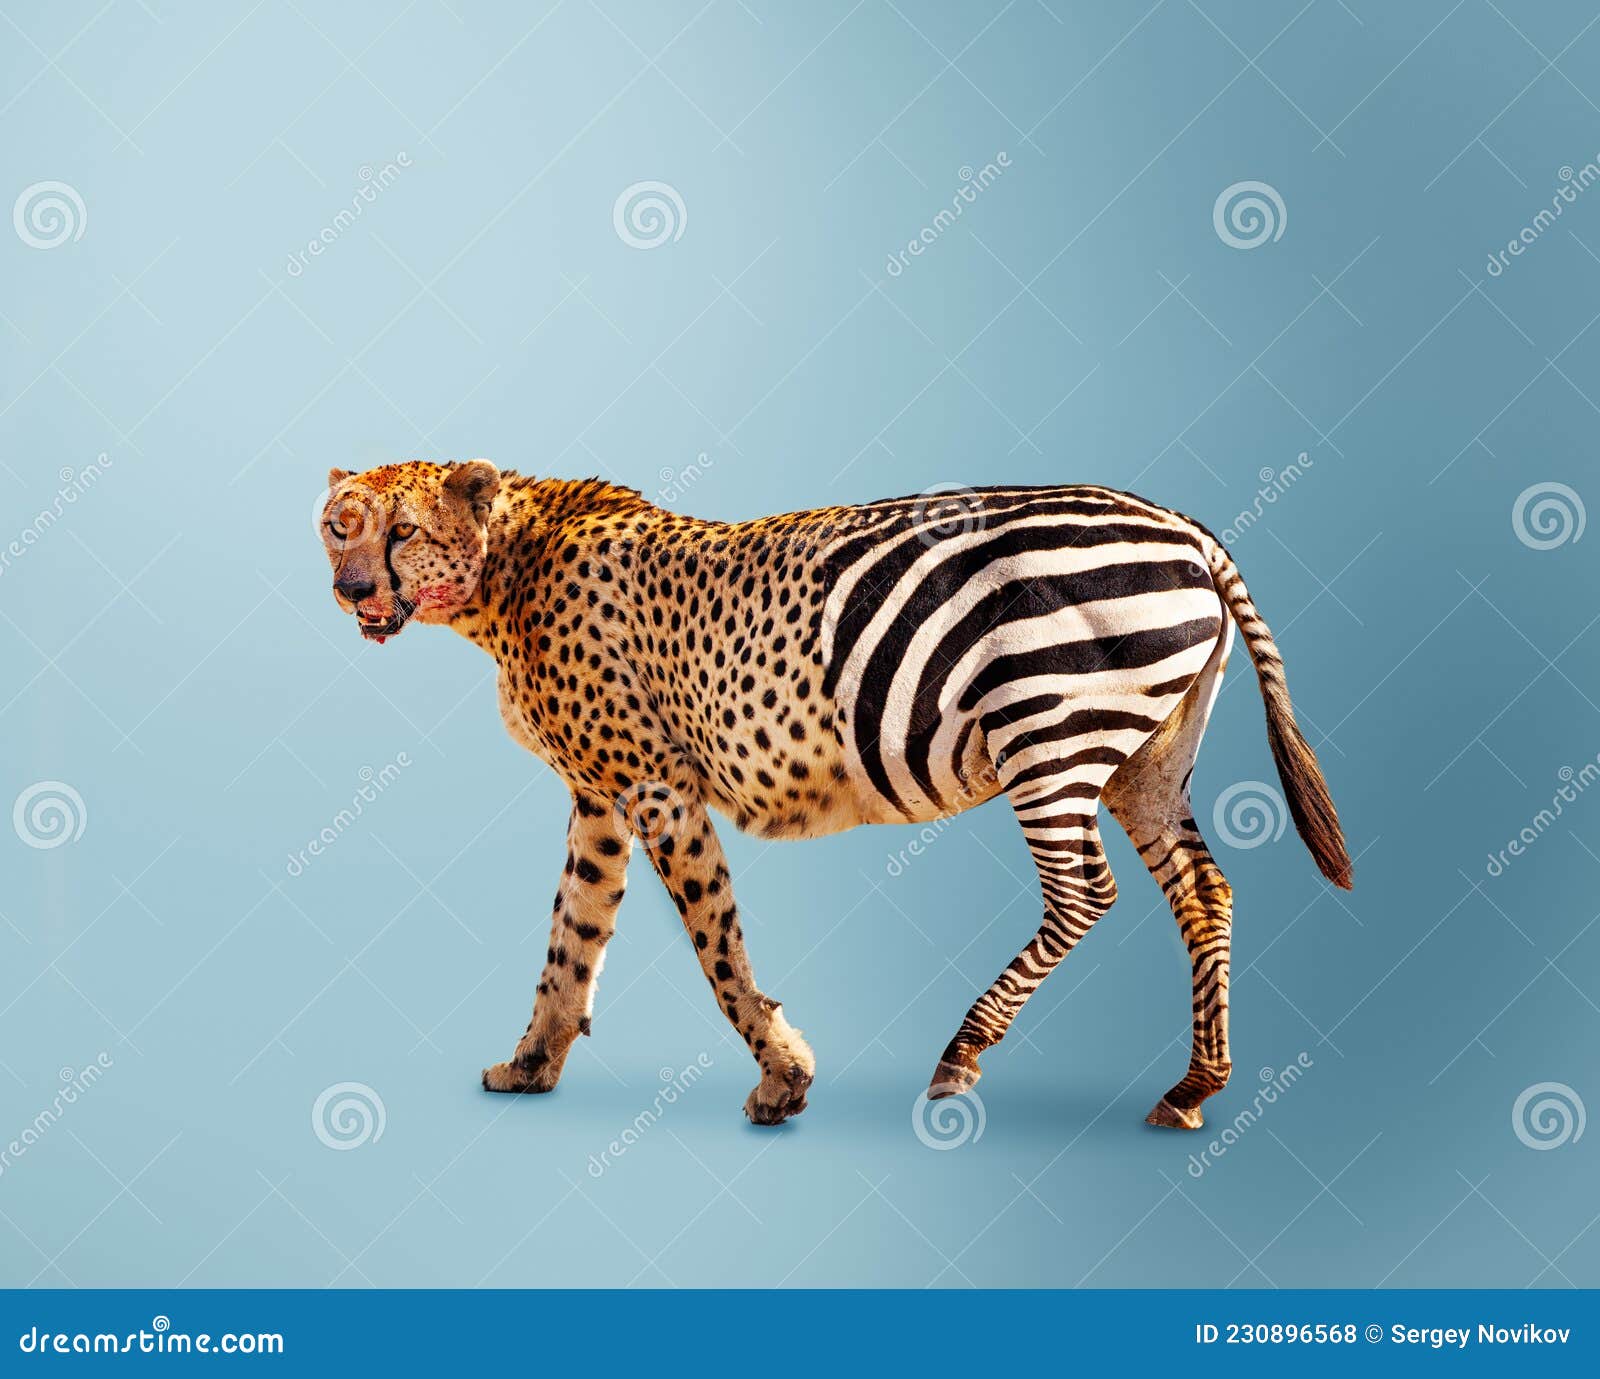 half cheetah partially zebra predator vs herbivore